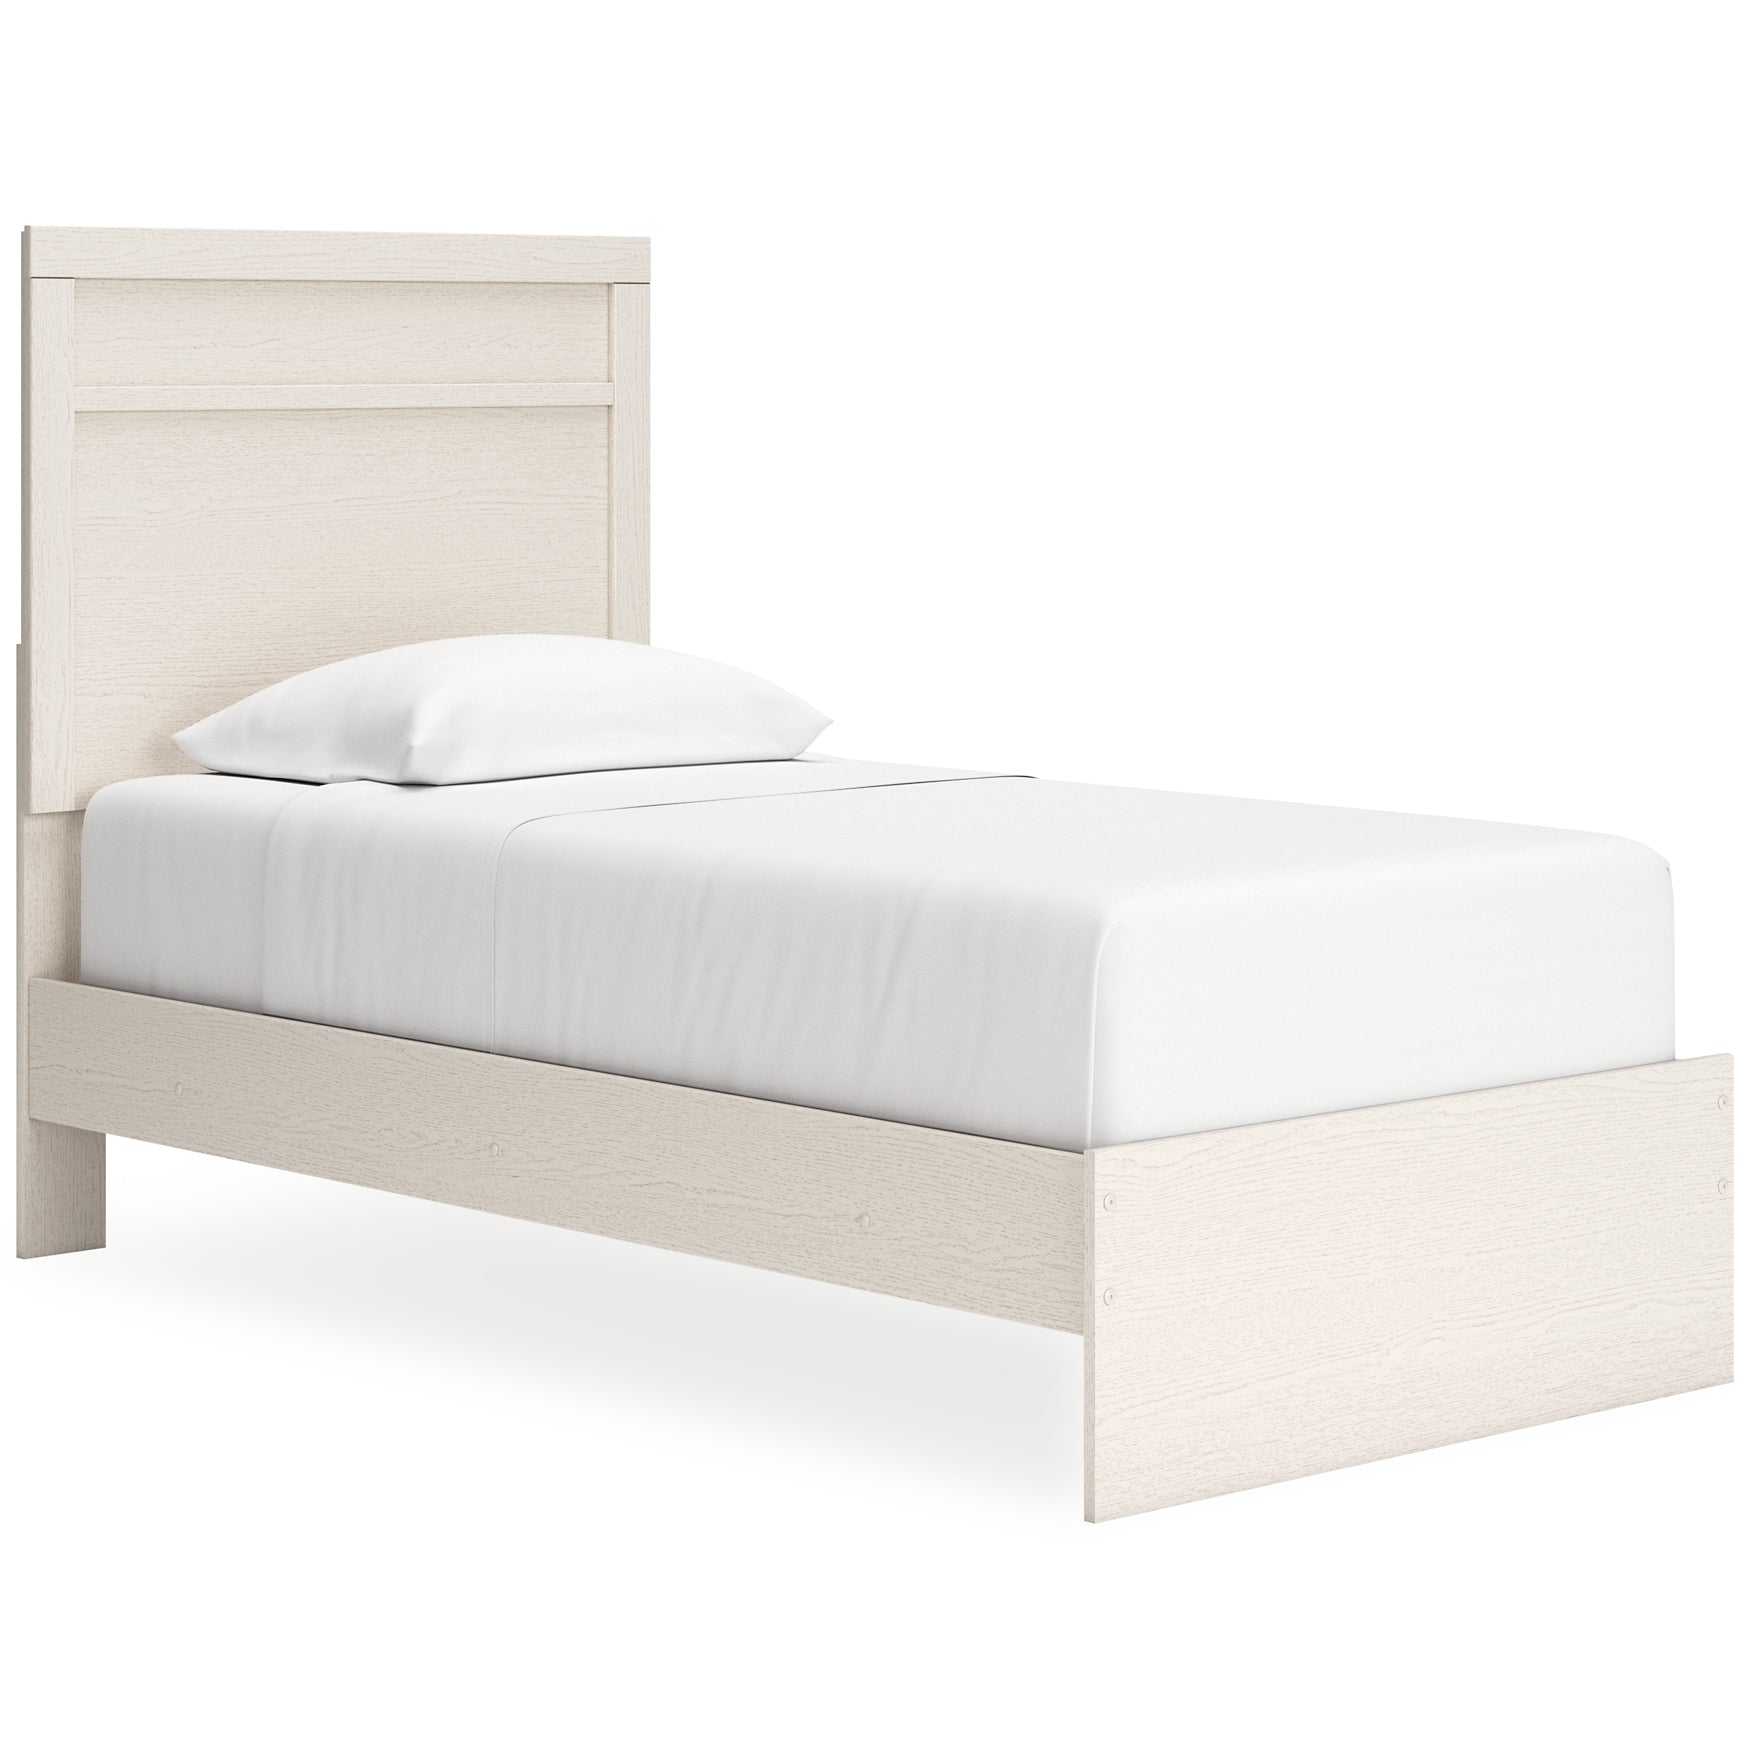 Stelsie Twin Panel Bed with Dresser JB's Furniture  Home Furniture, Home Decor, Furniture Store